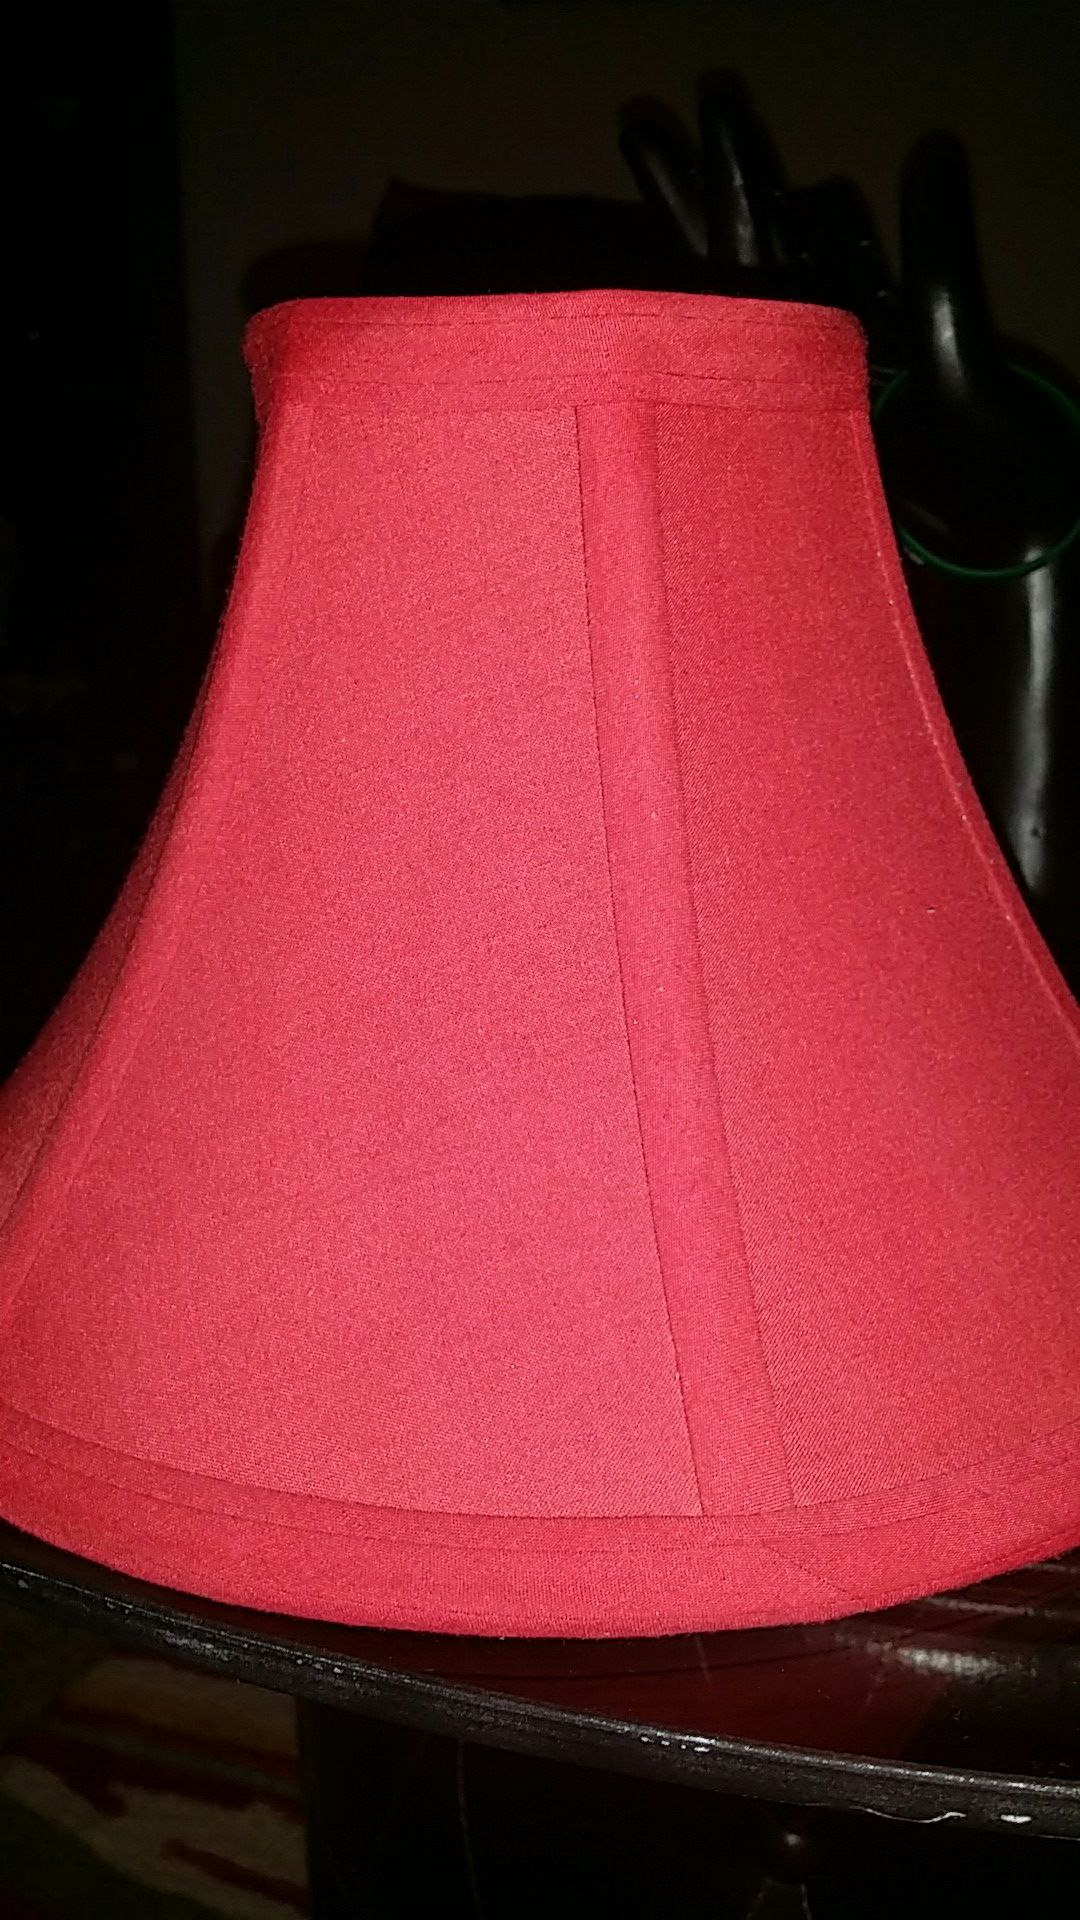 2 red lamp shade